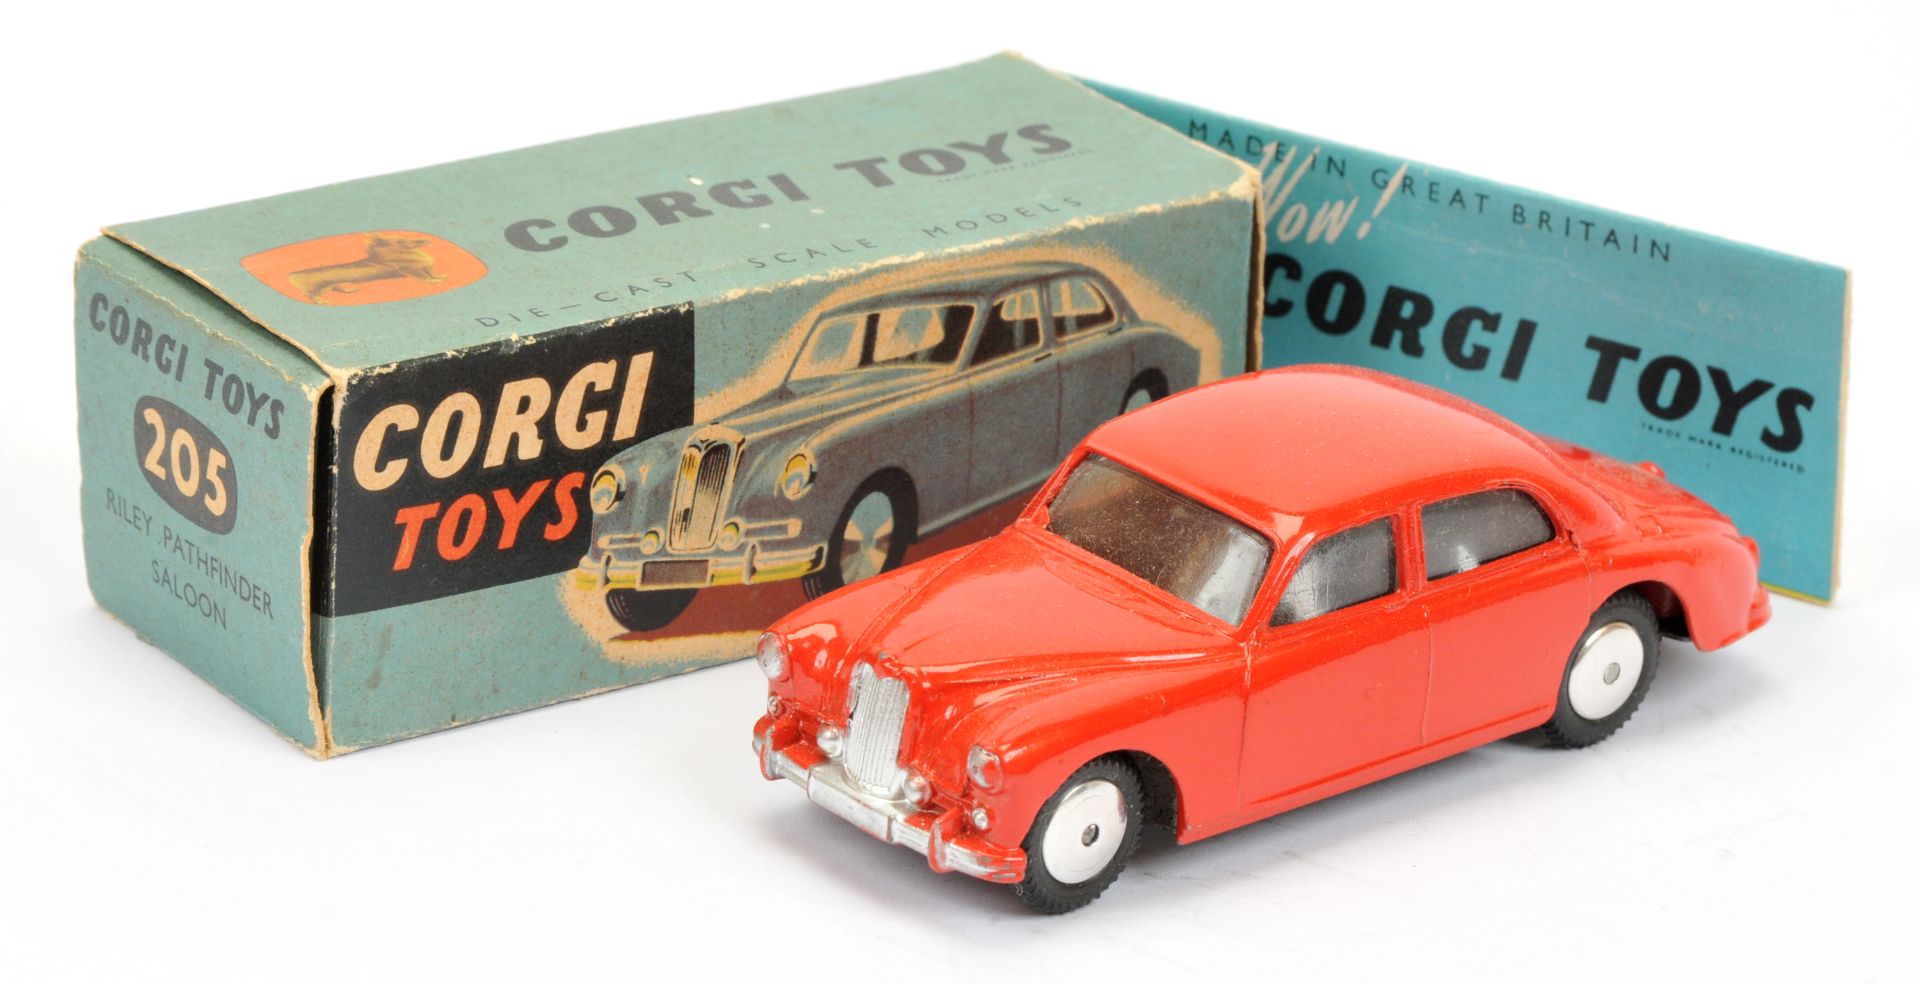 Corgi Toys 205 Riley Pathfinder Saloon - Bright red body, silver trim and flat spun hubs 